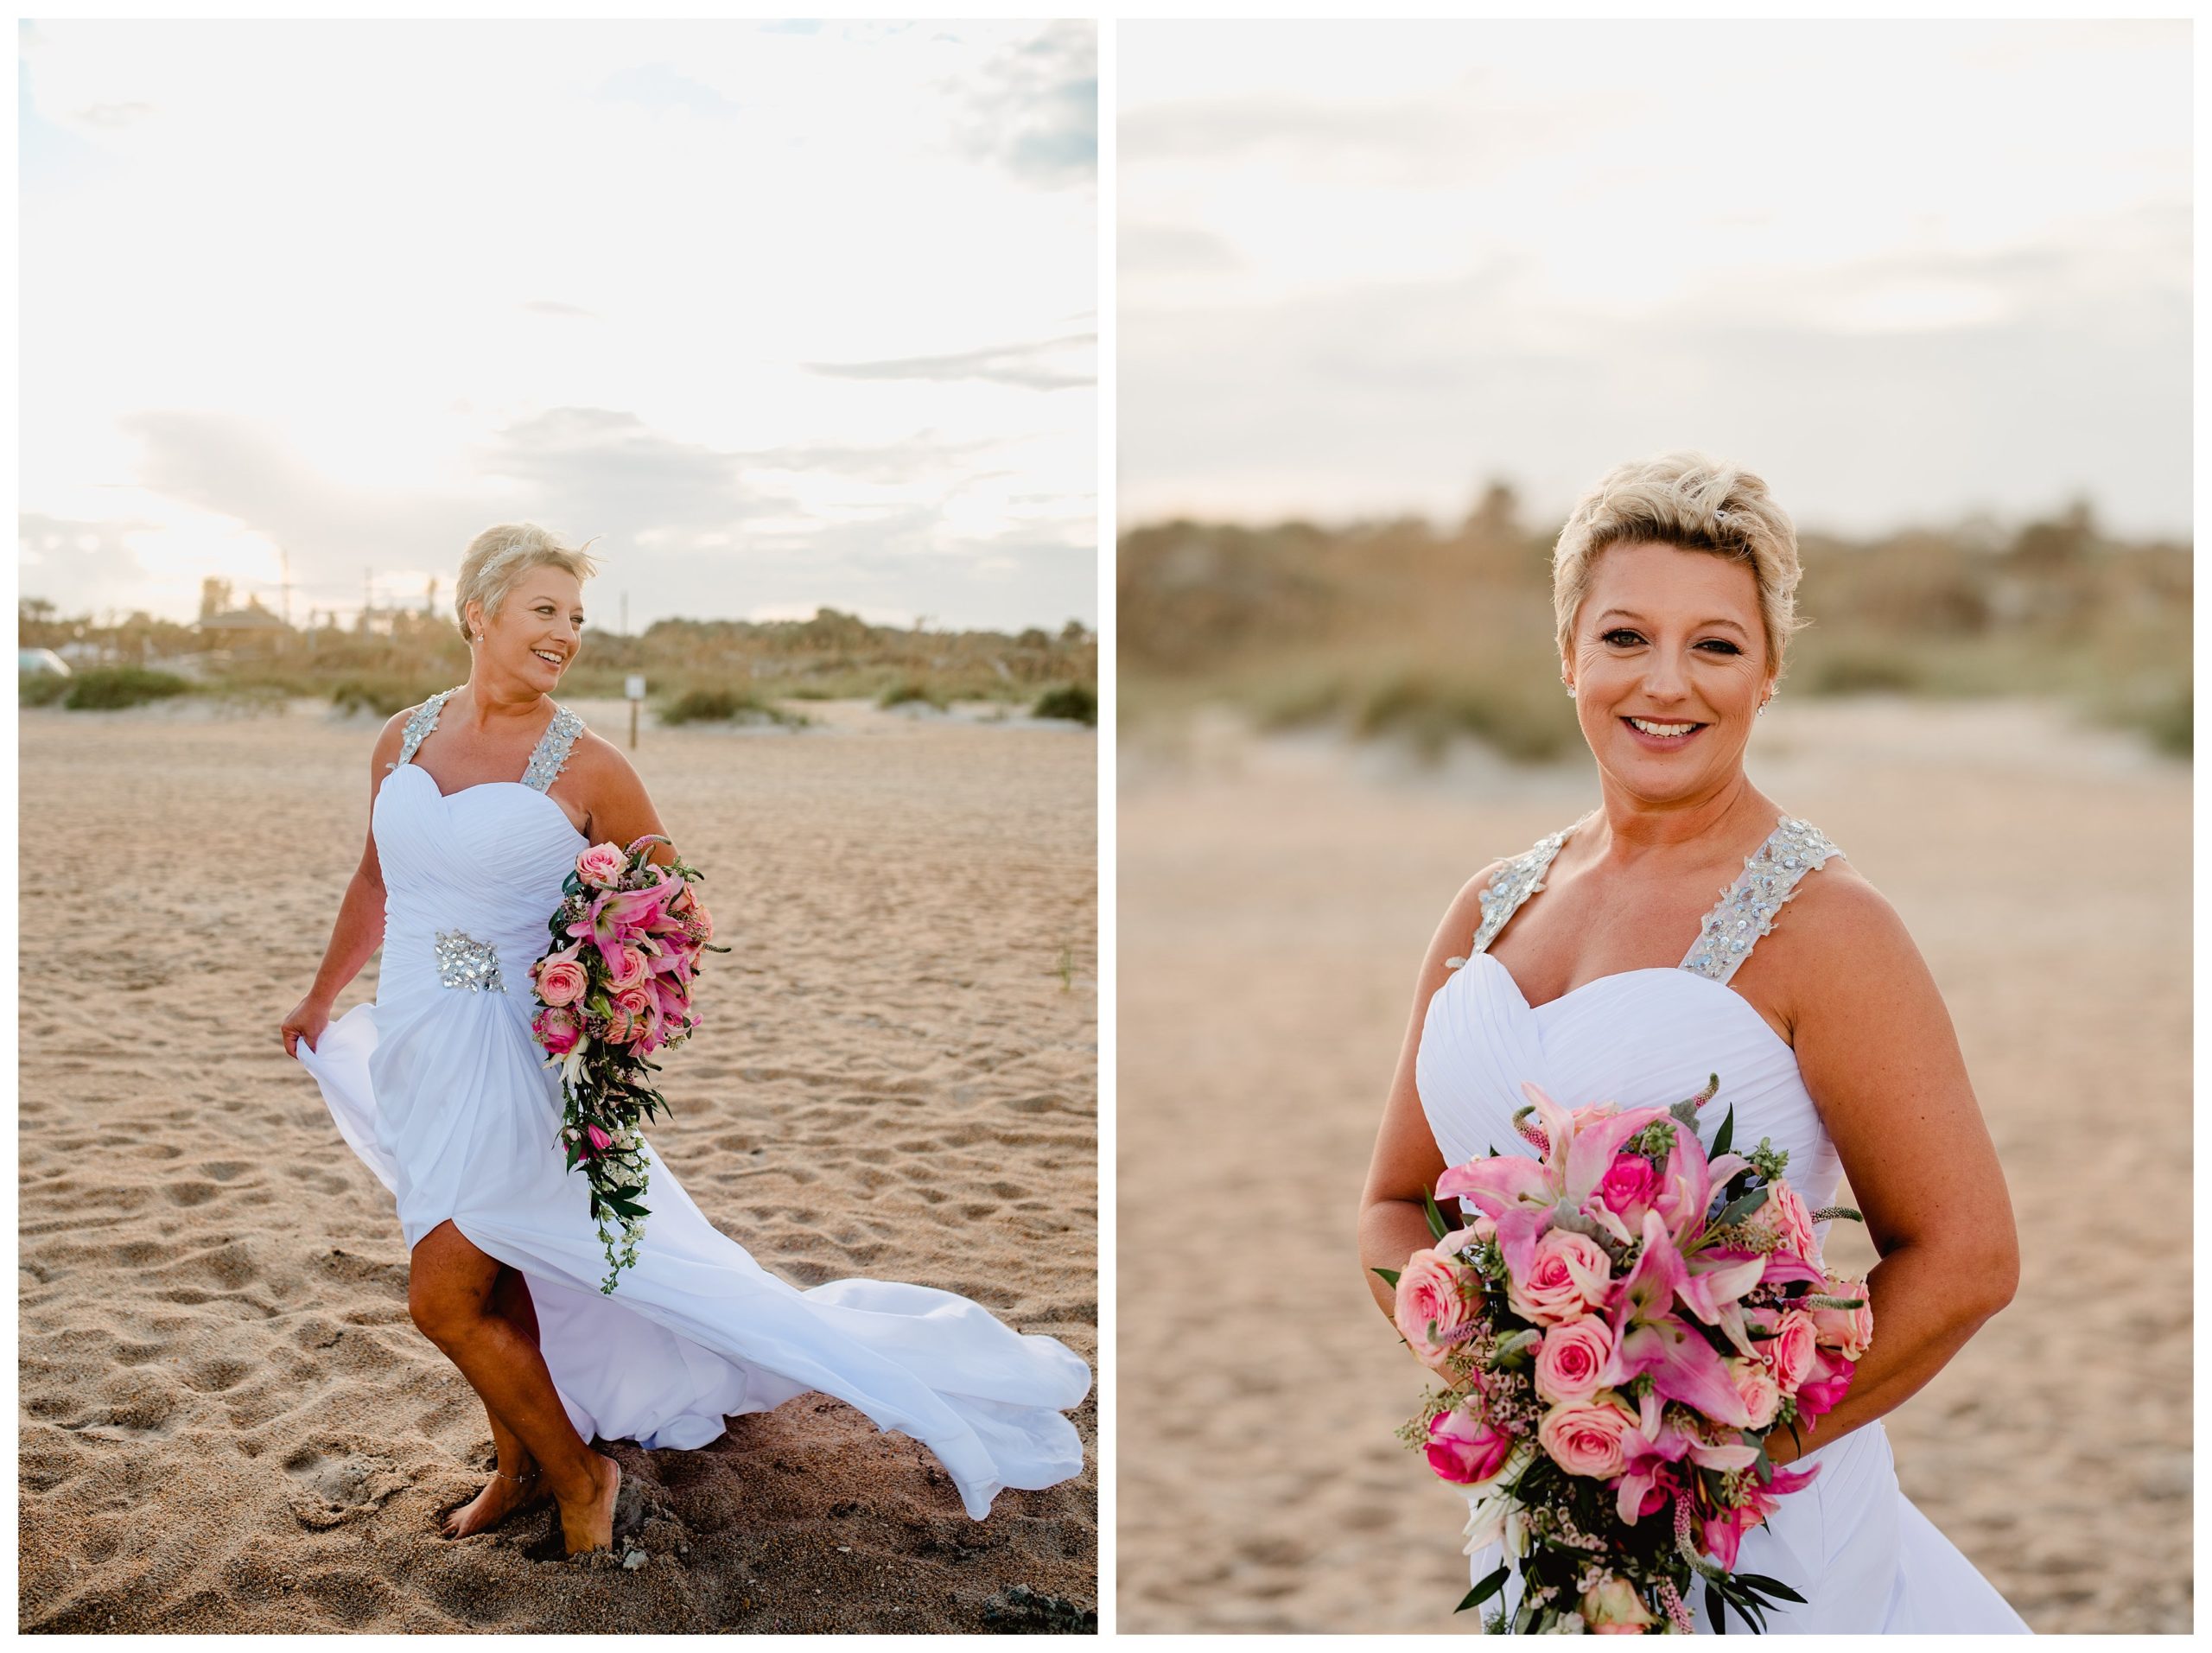 Bridal portraits taken in flowing, beach wedding dress in St. Augustine.